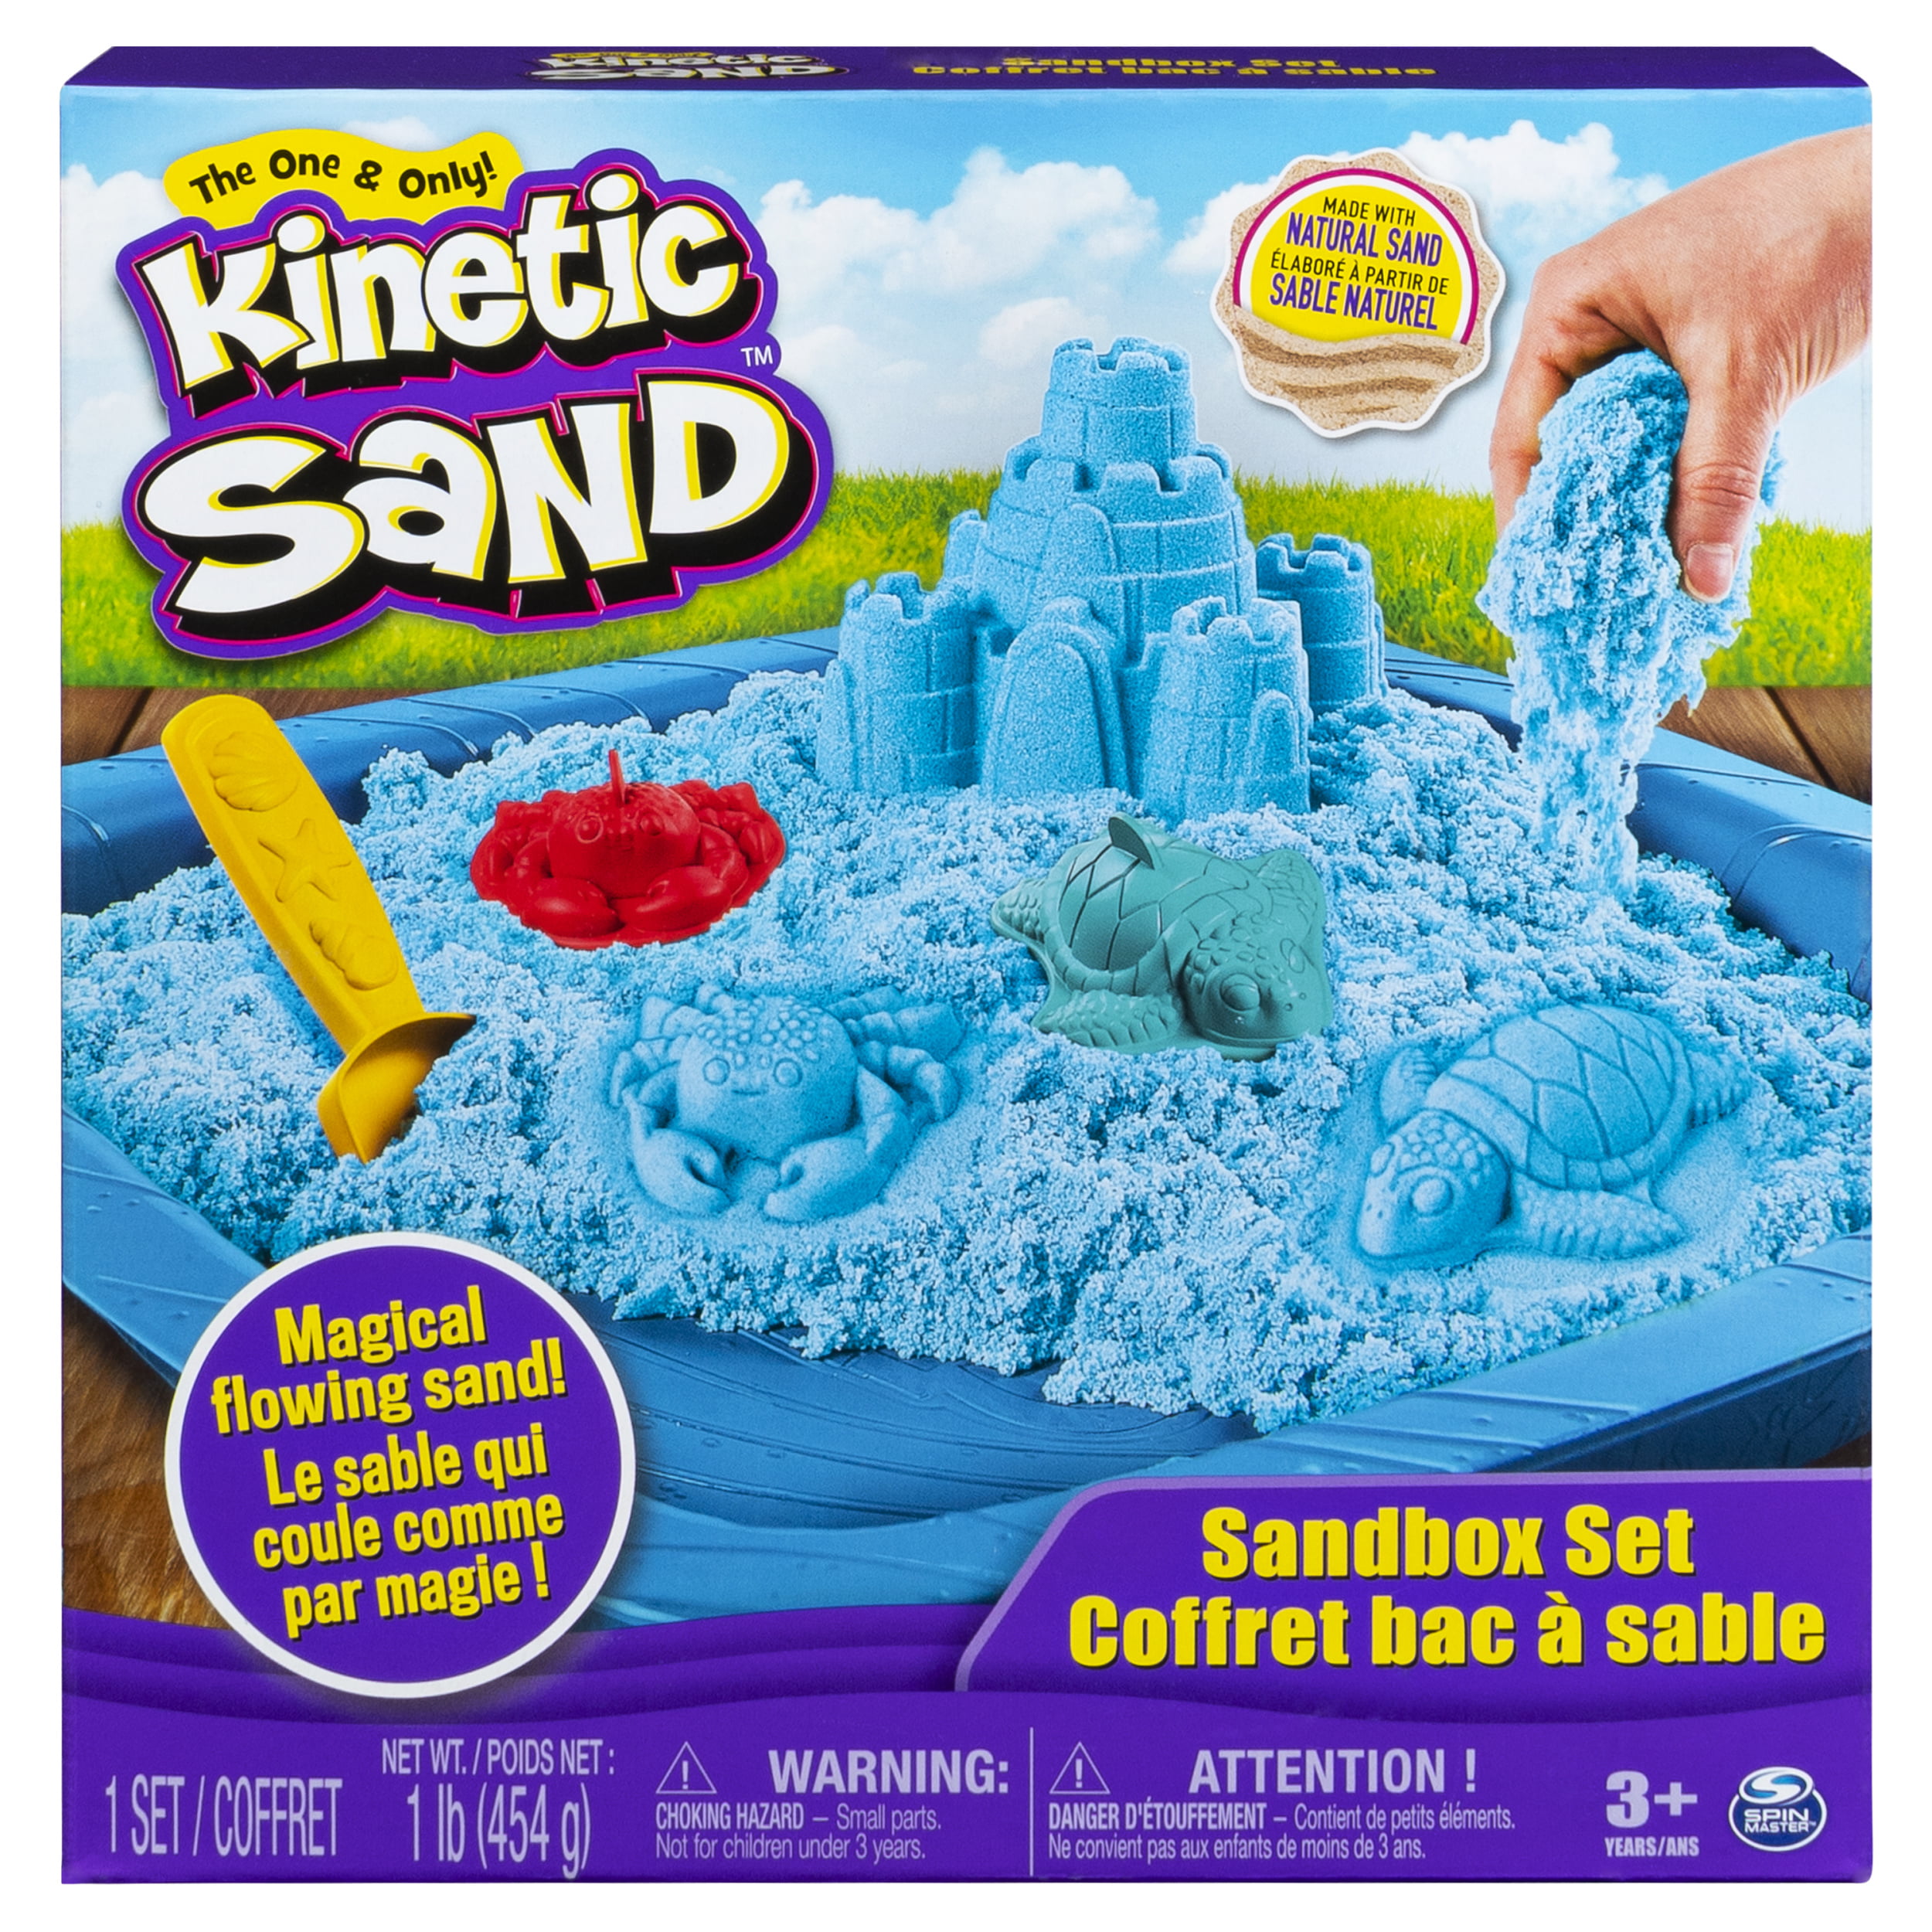 kinetic sand walmart near me